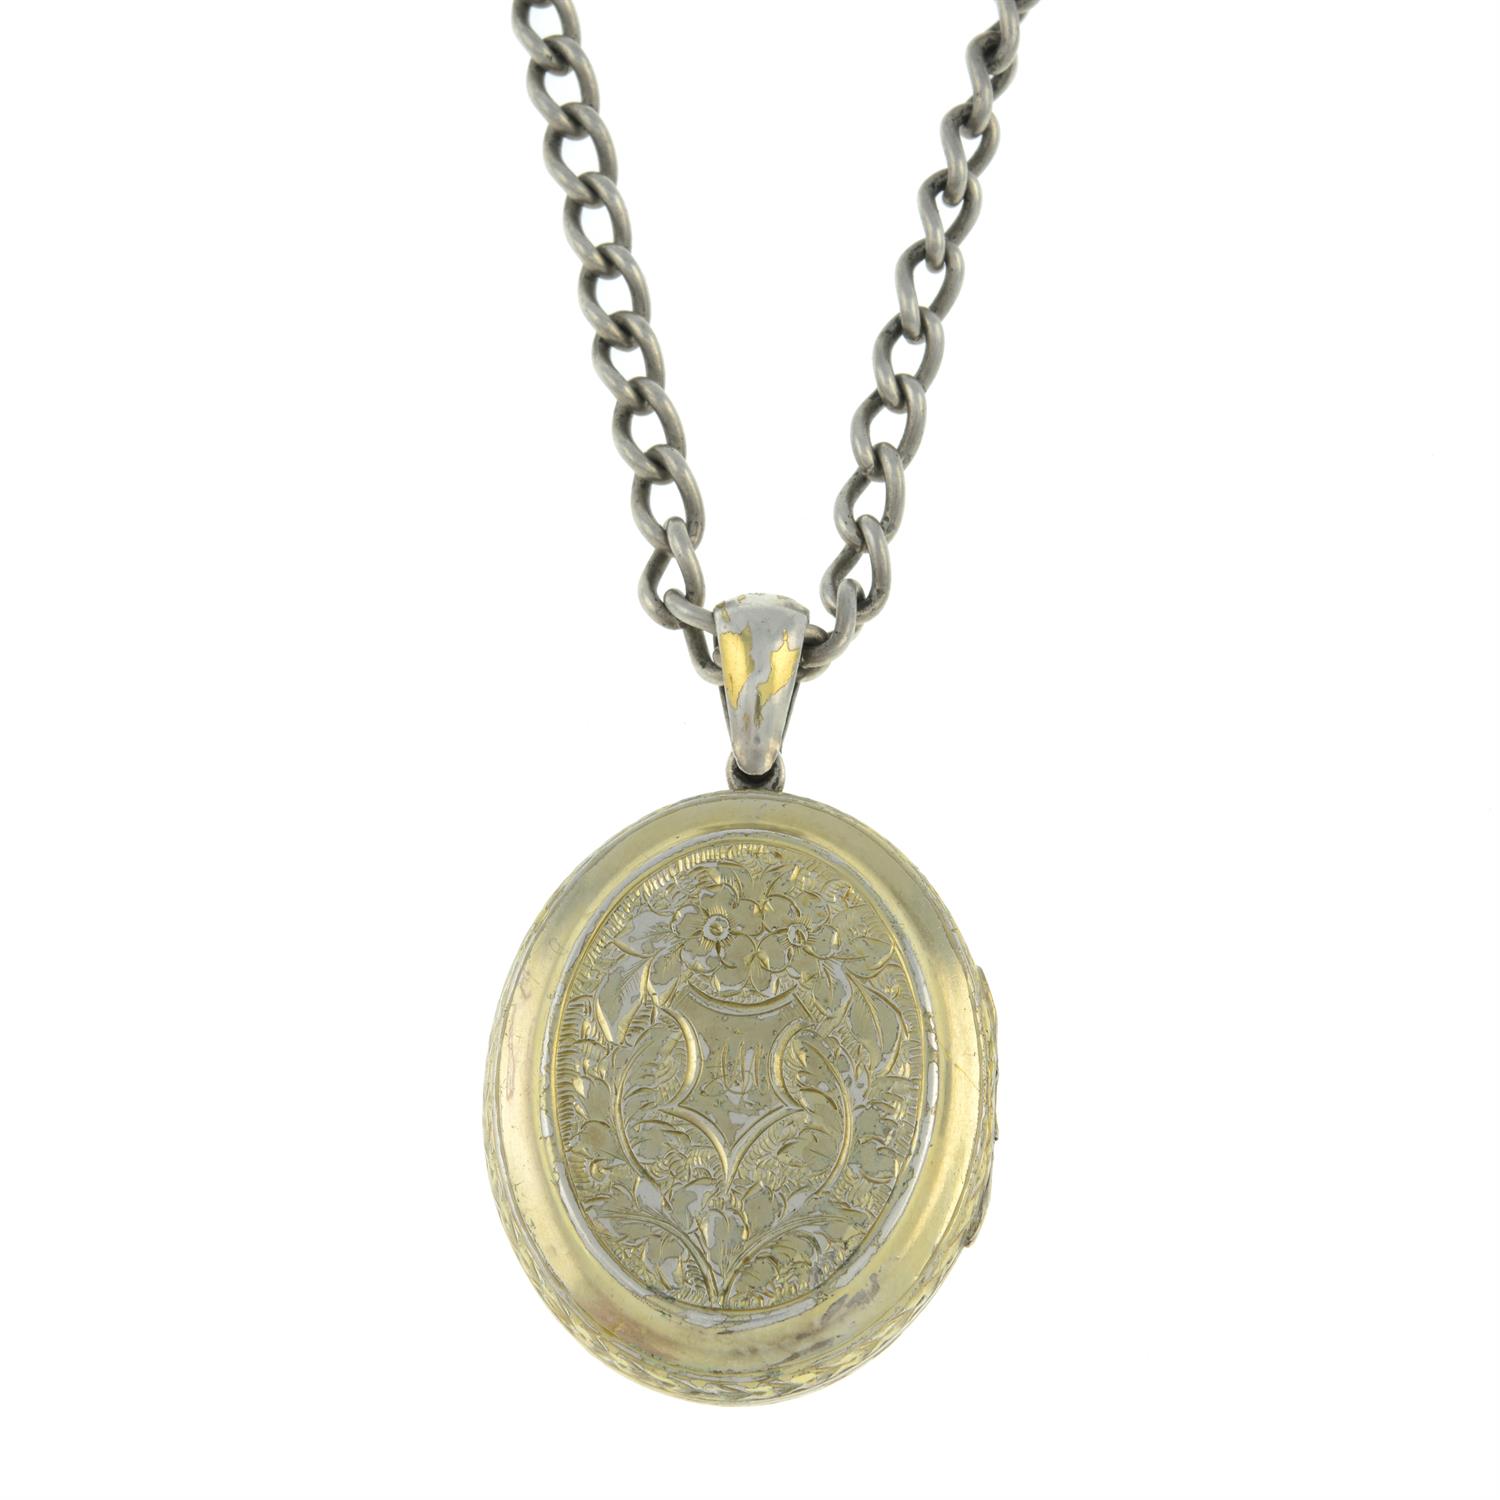 Victorian locket pendant & chain